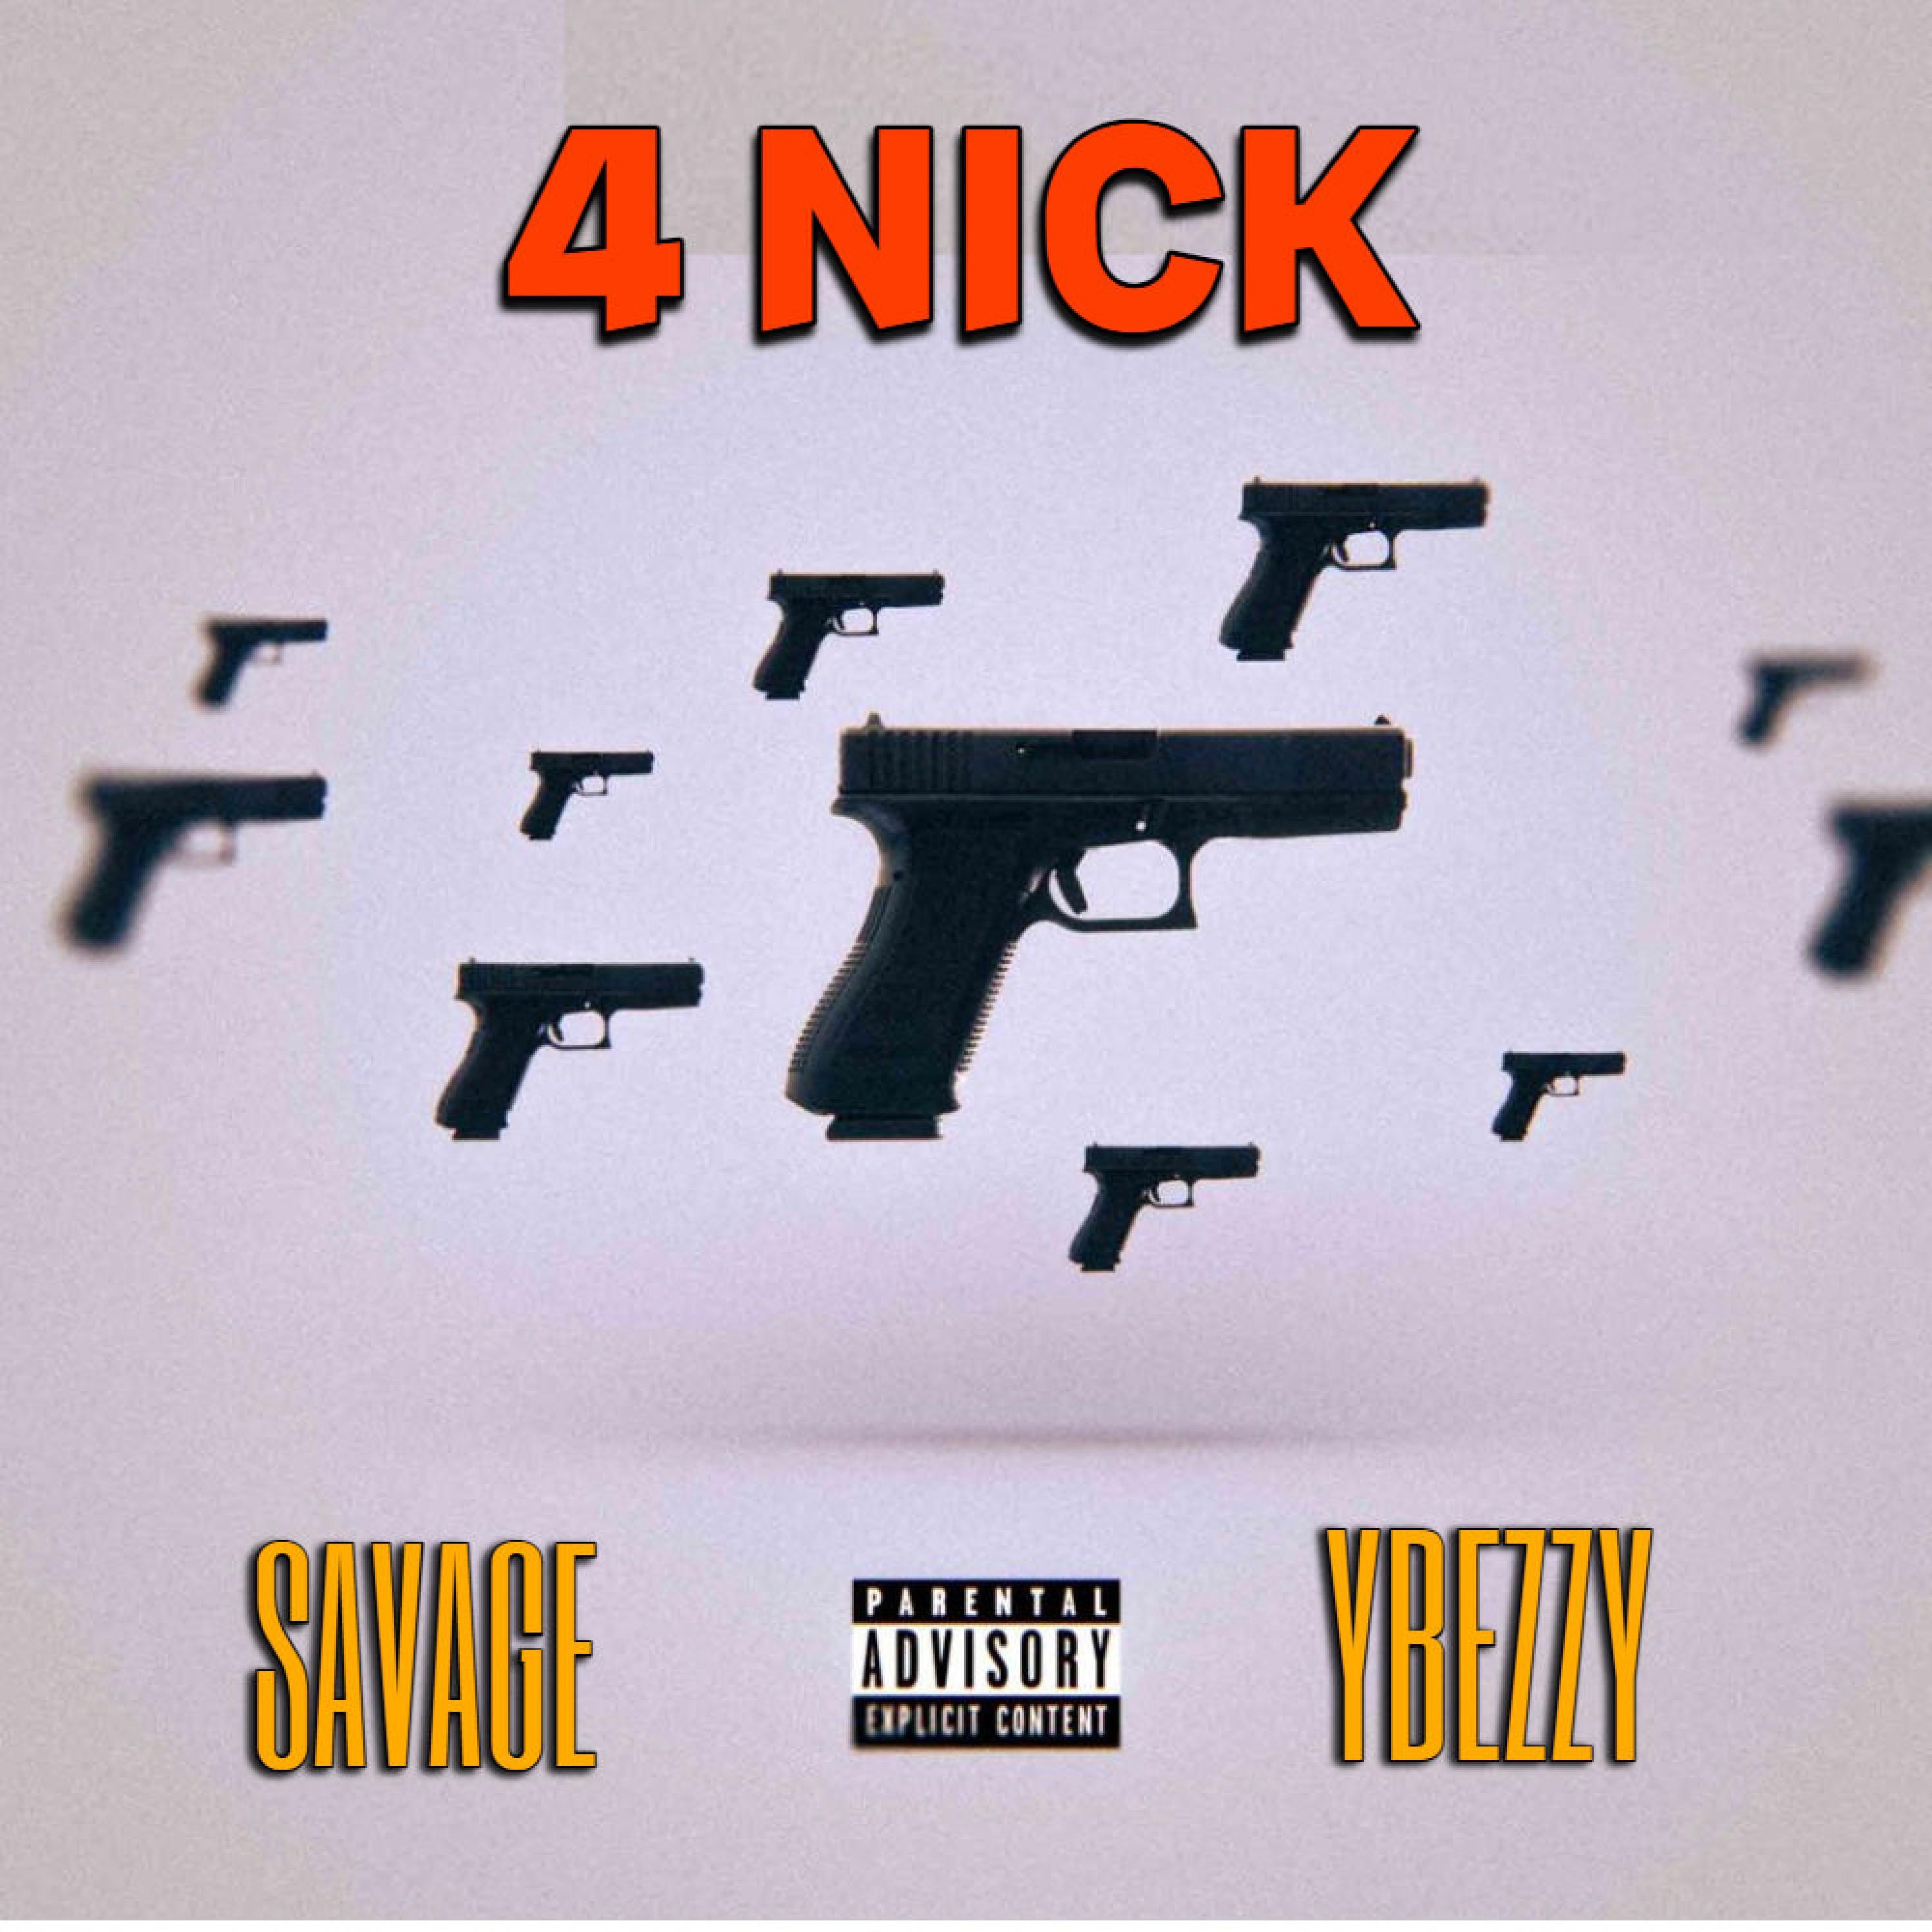 4TF ENT - 4 NICK (feat. SAVAGE & YBEZZY)